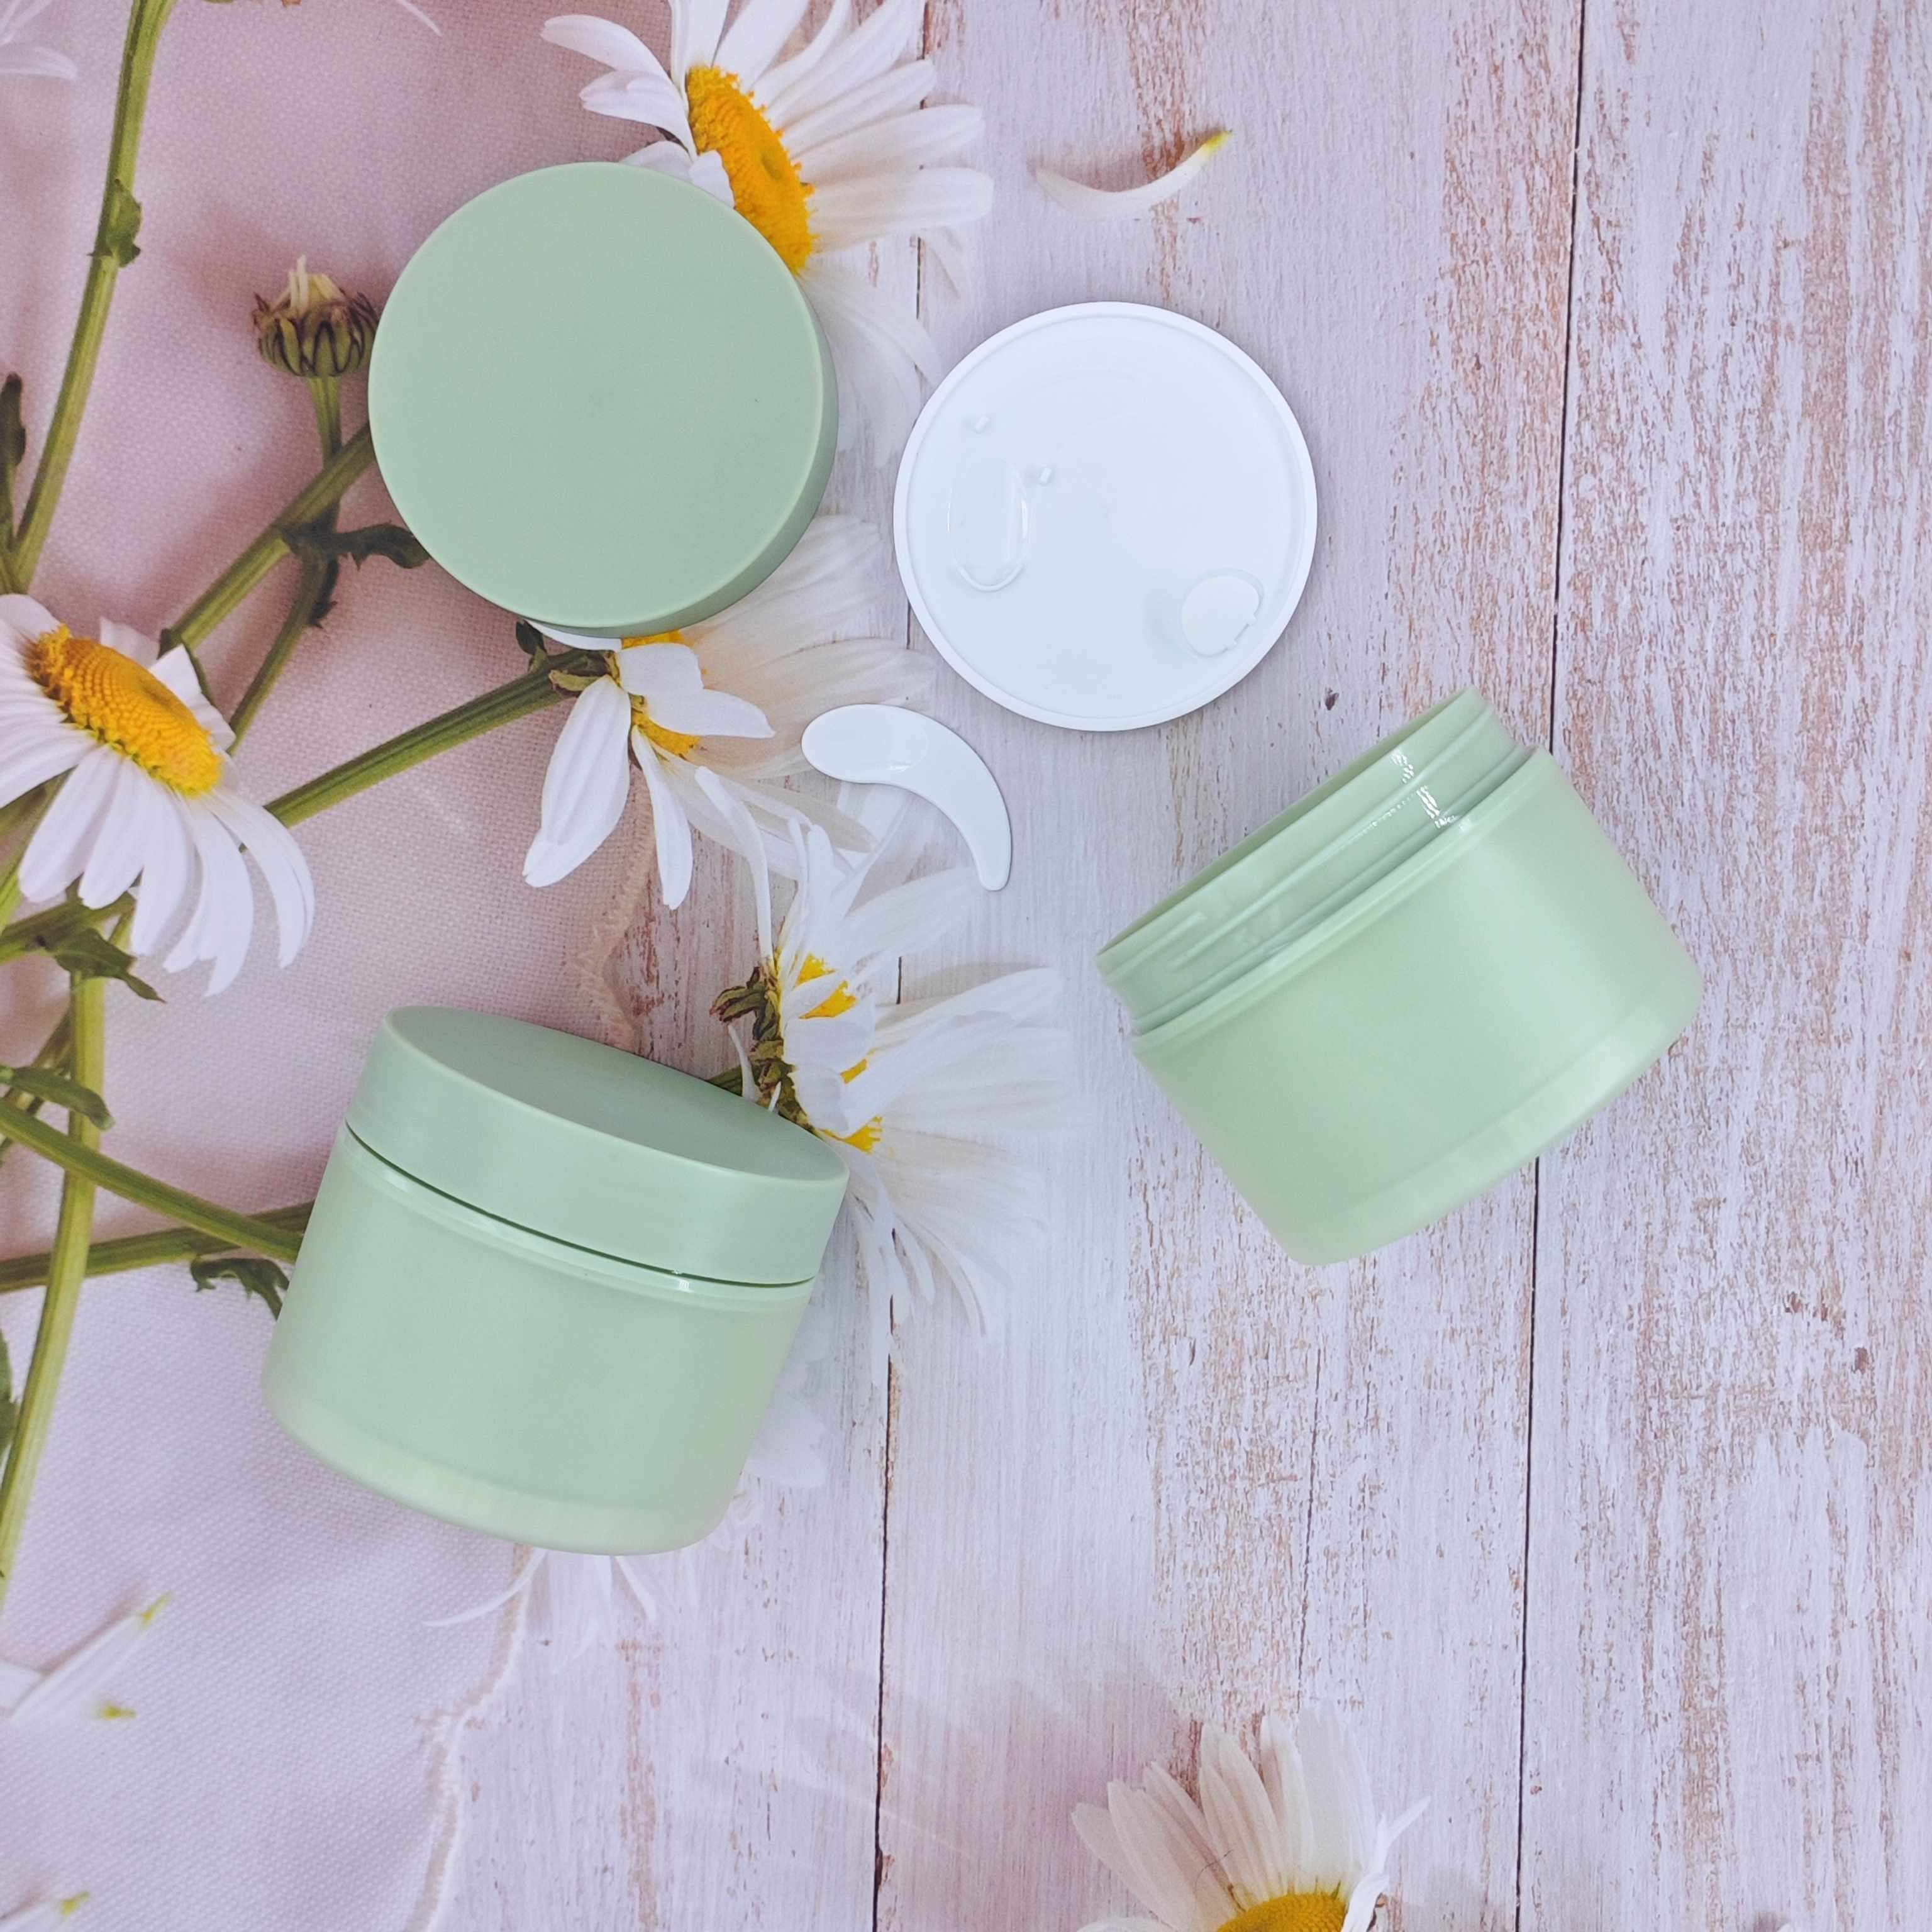 plastic skin care lotion cream jar